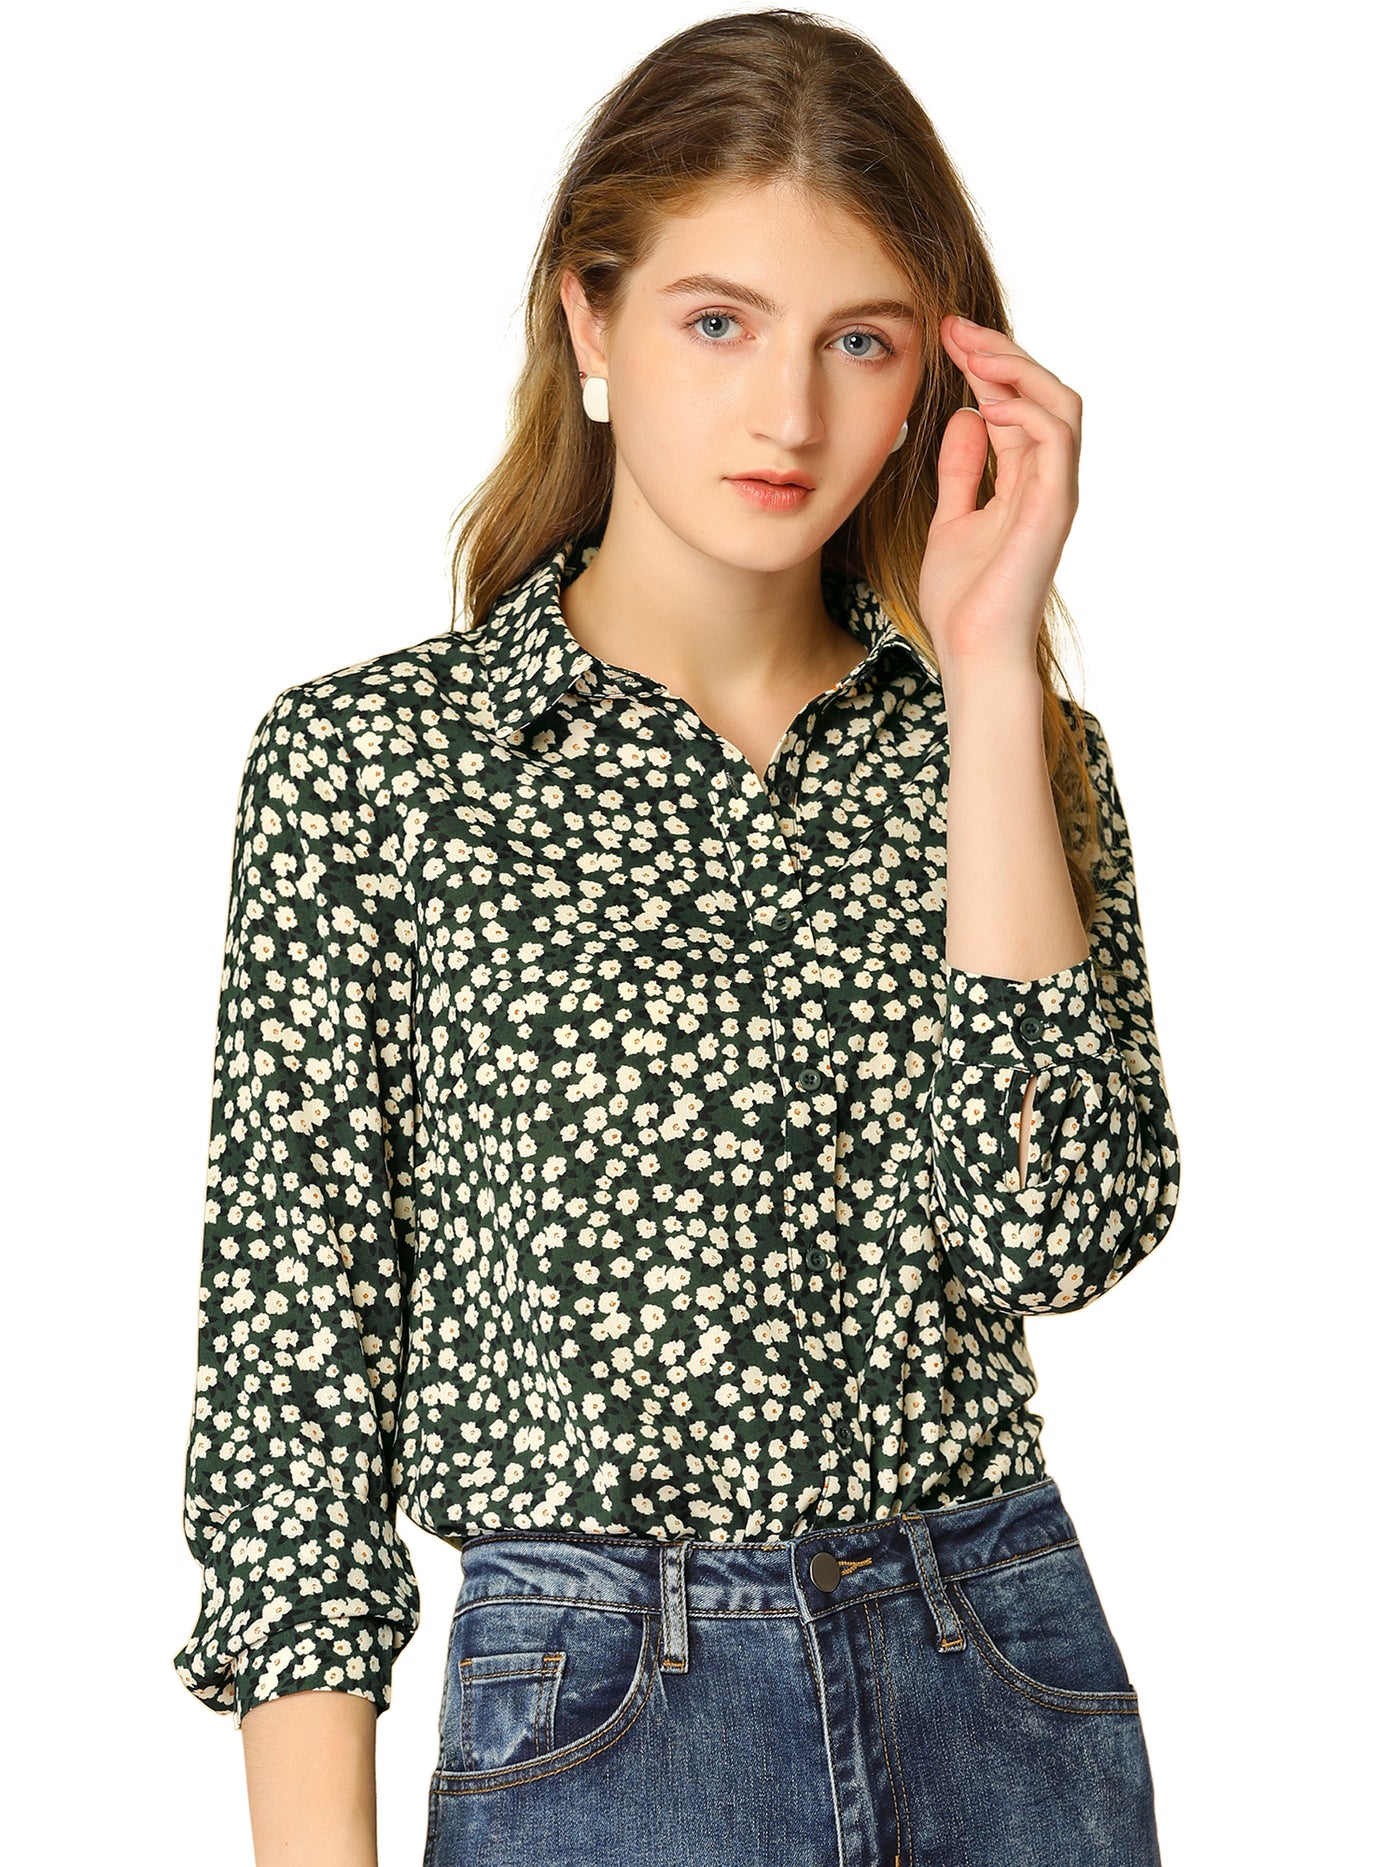 Allegra K Button Down Floral Shirt Blouse Long Sleeve Point Collar Top